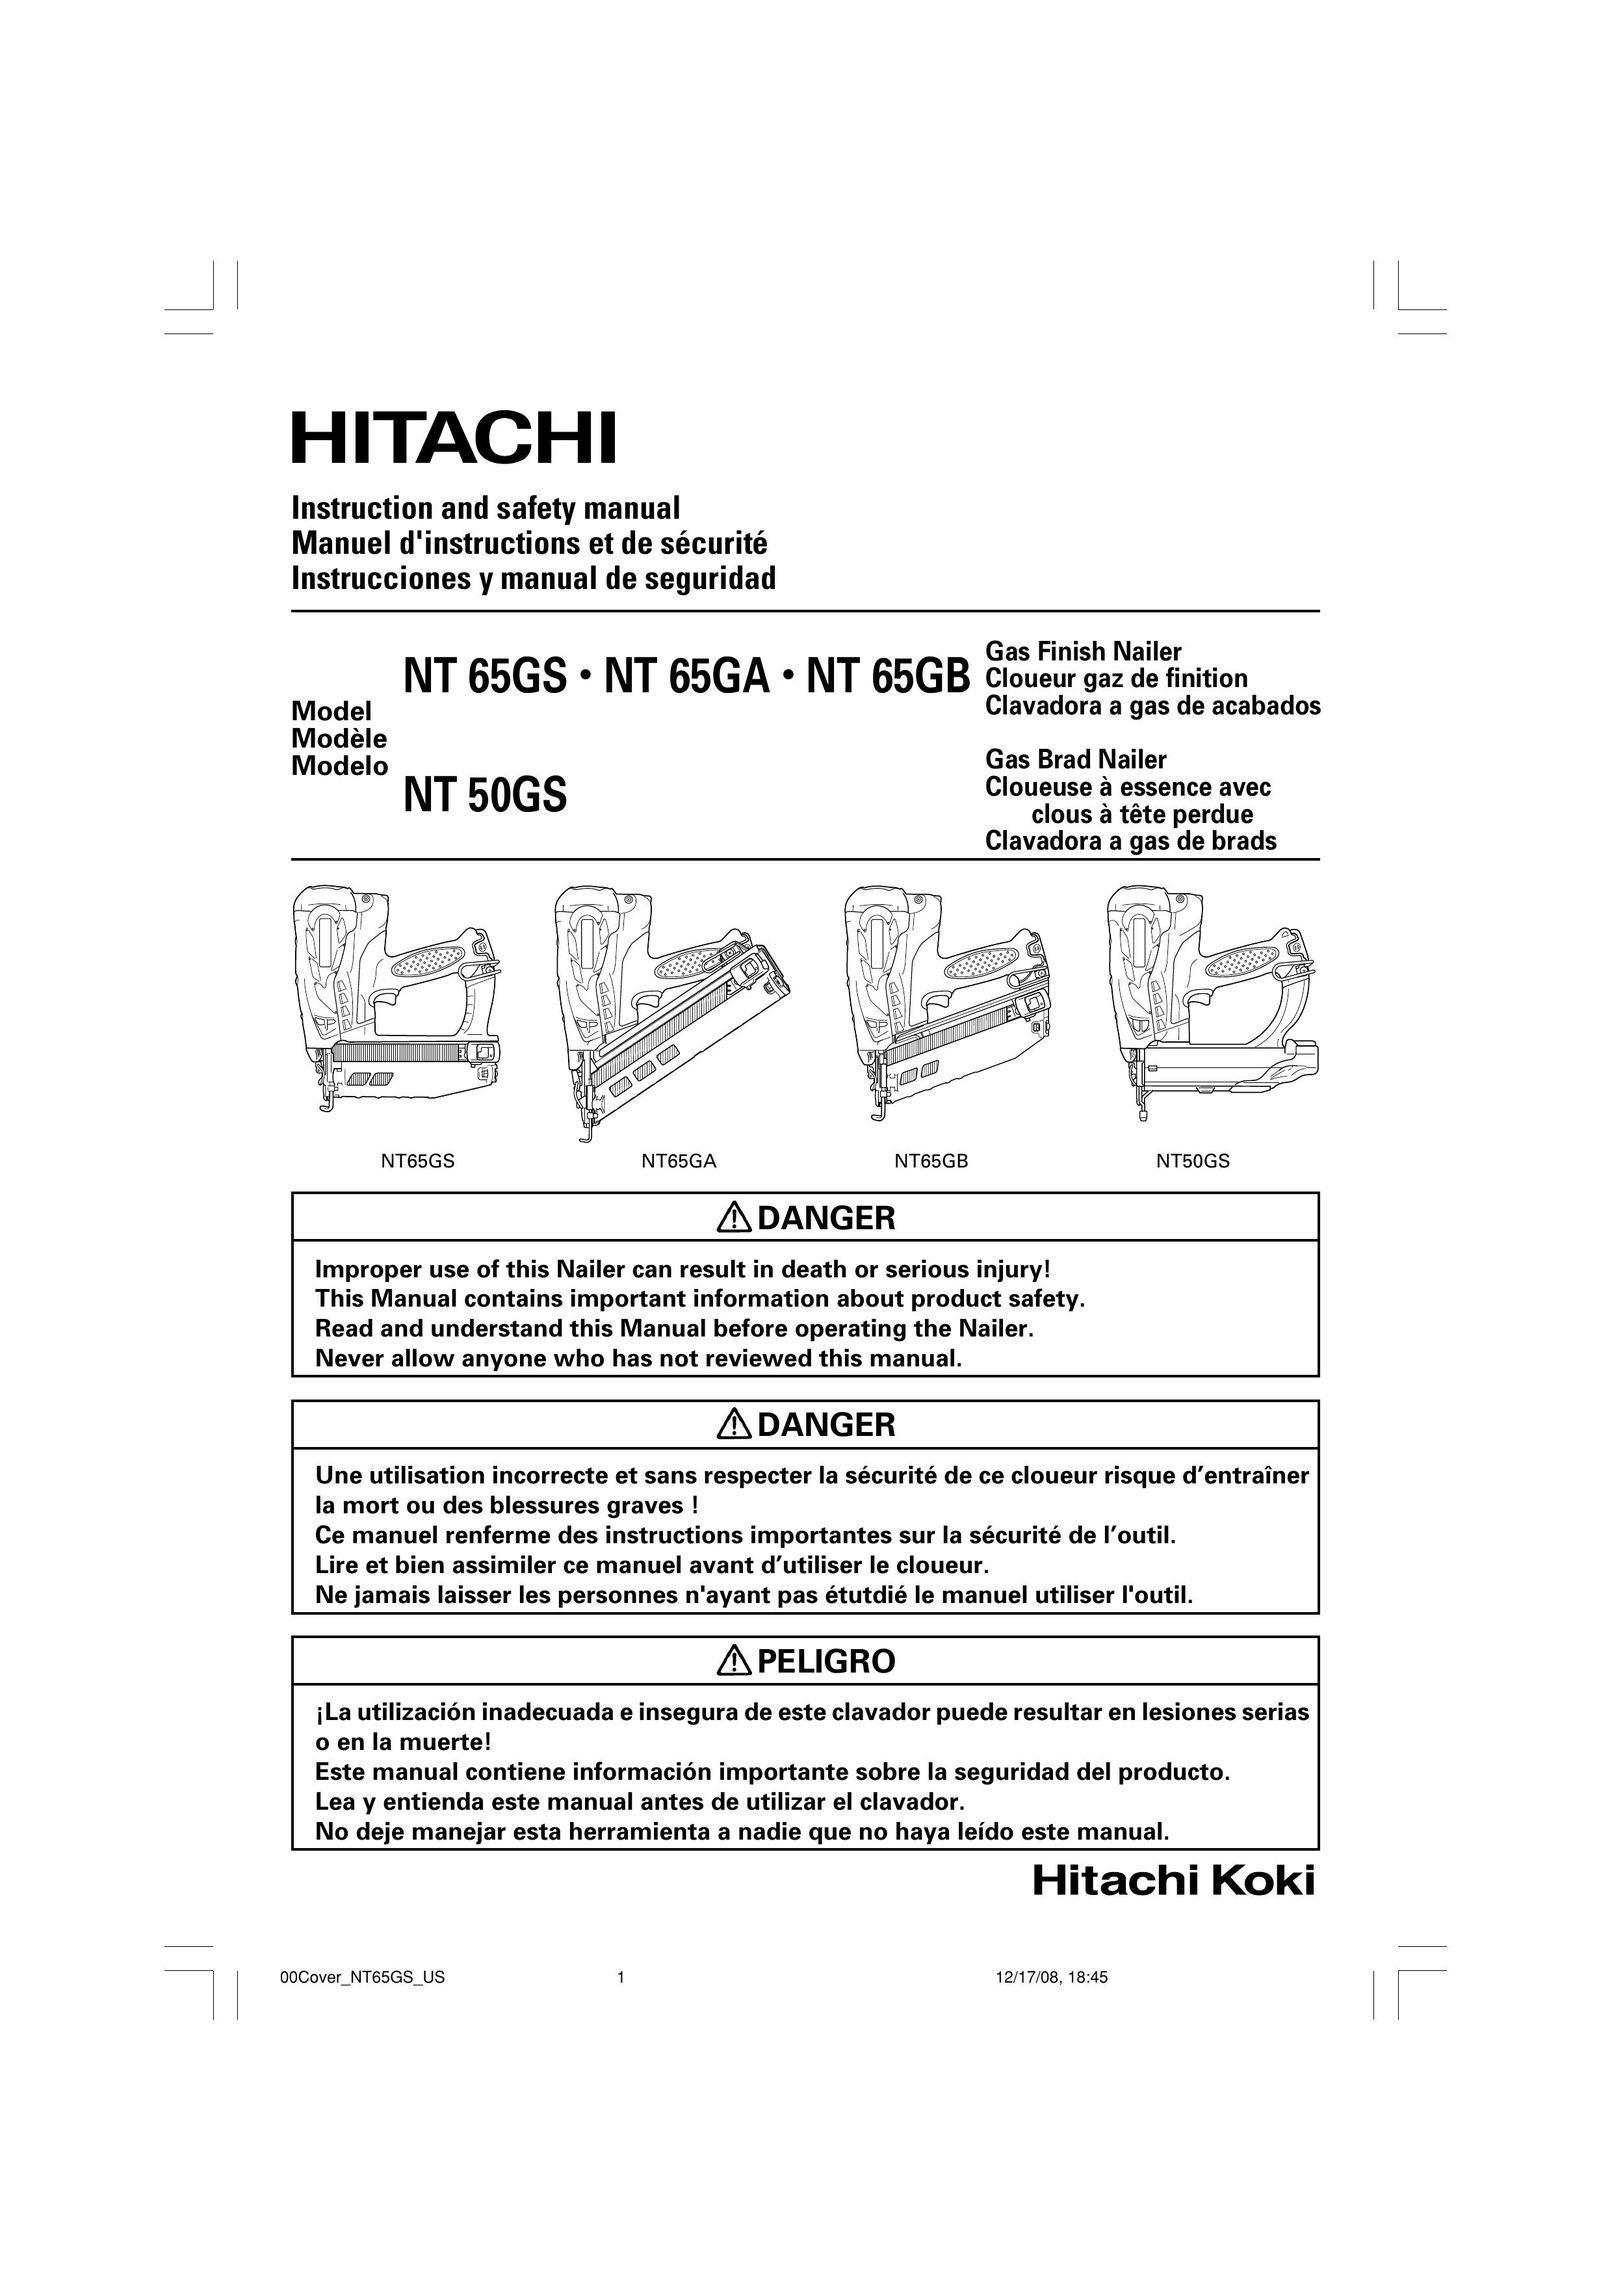 Hitachi NT 65GA Nail Gun User Manual